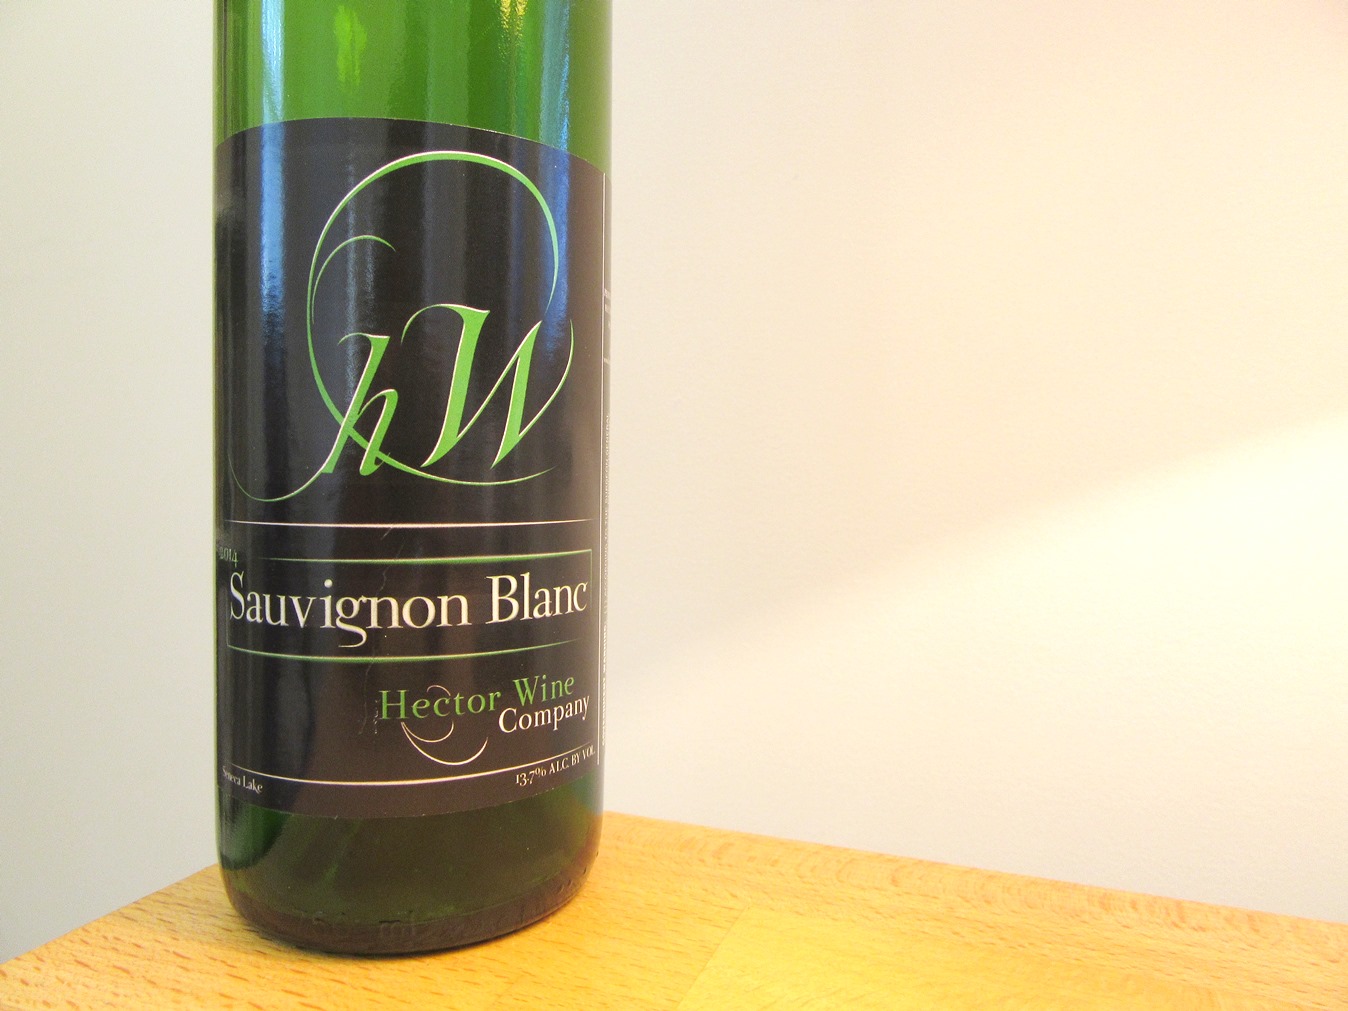 Hector Wine Company, Sauvignon Blanc 2014, Seneca Lake, New York, Wine Casual